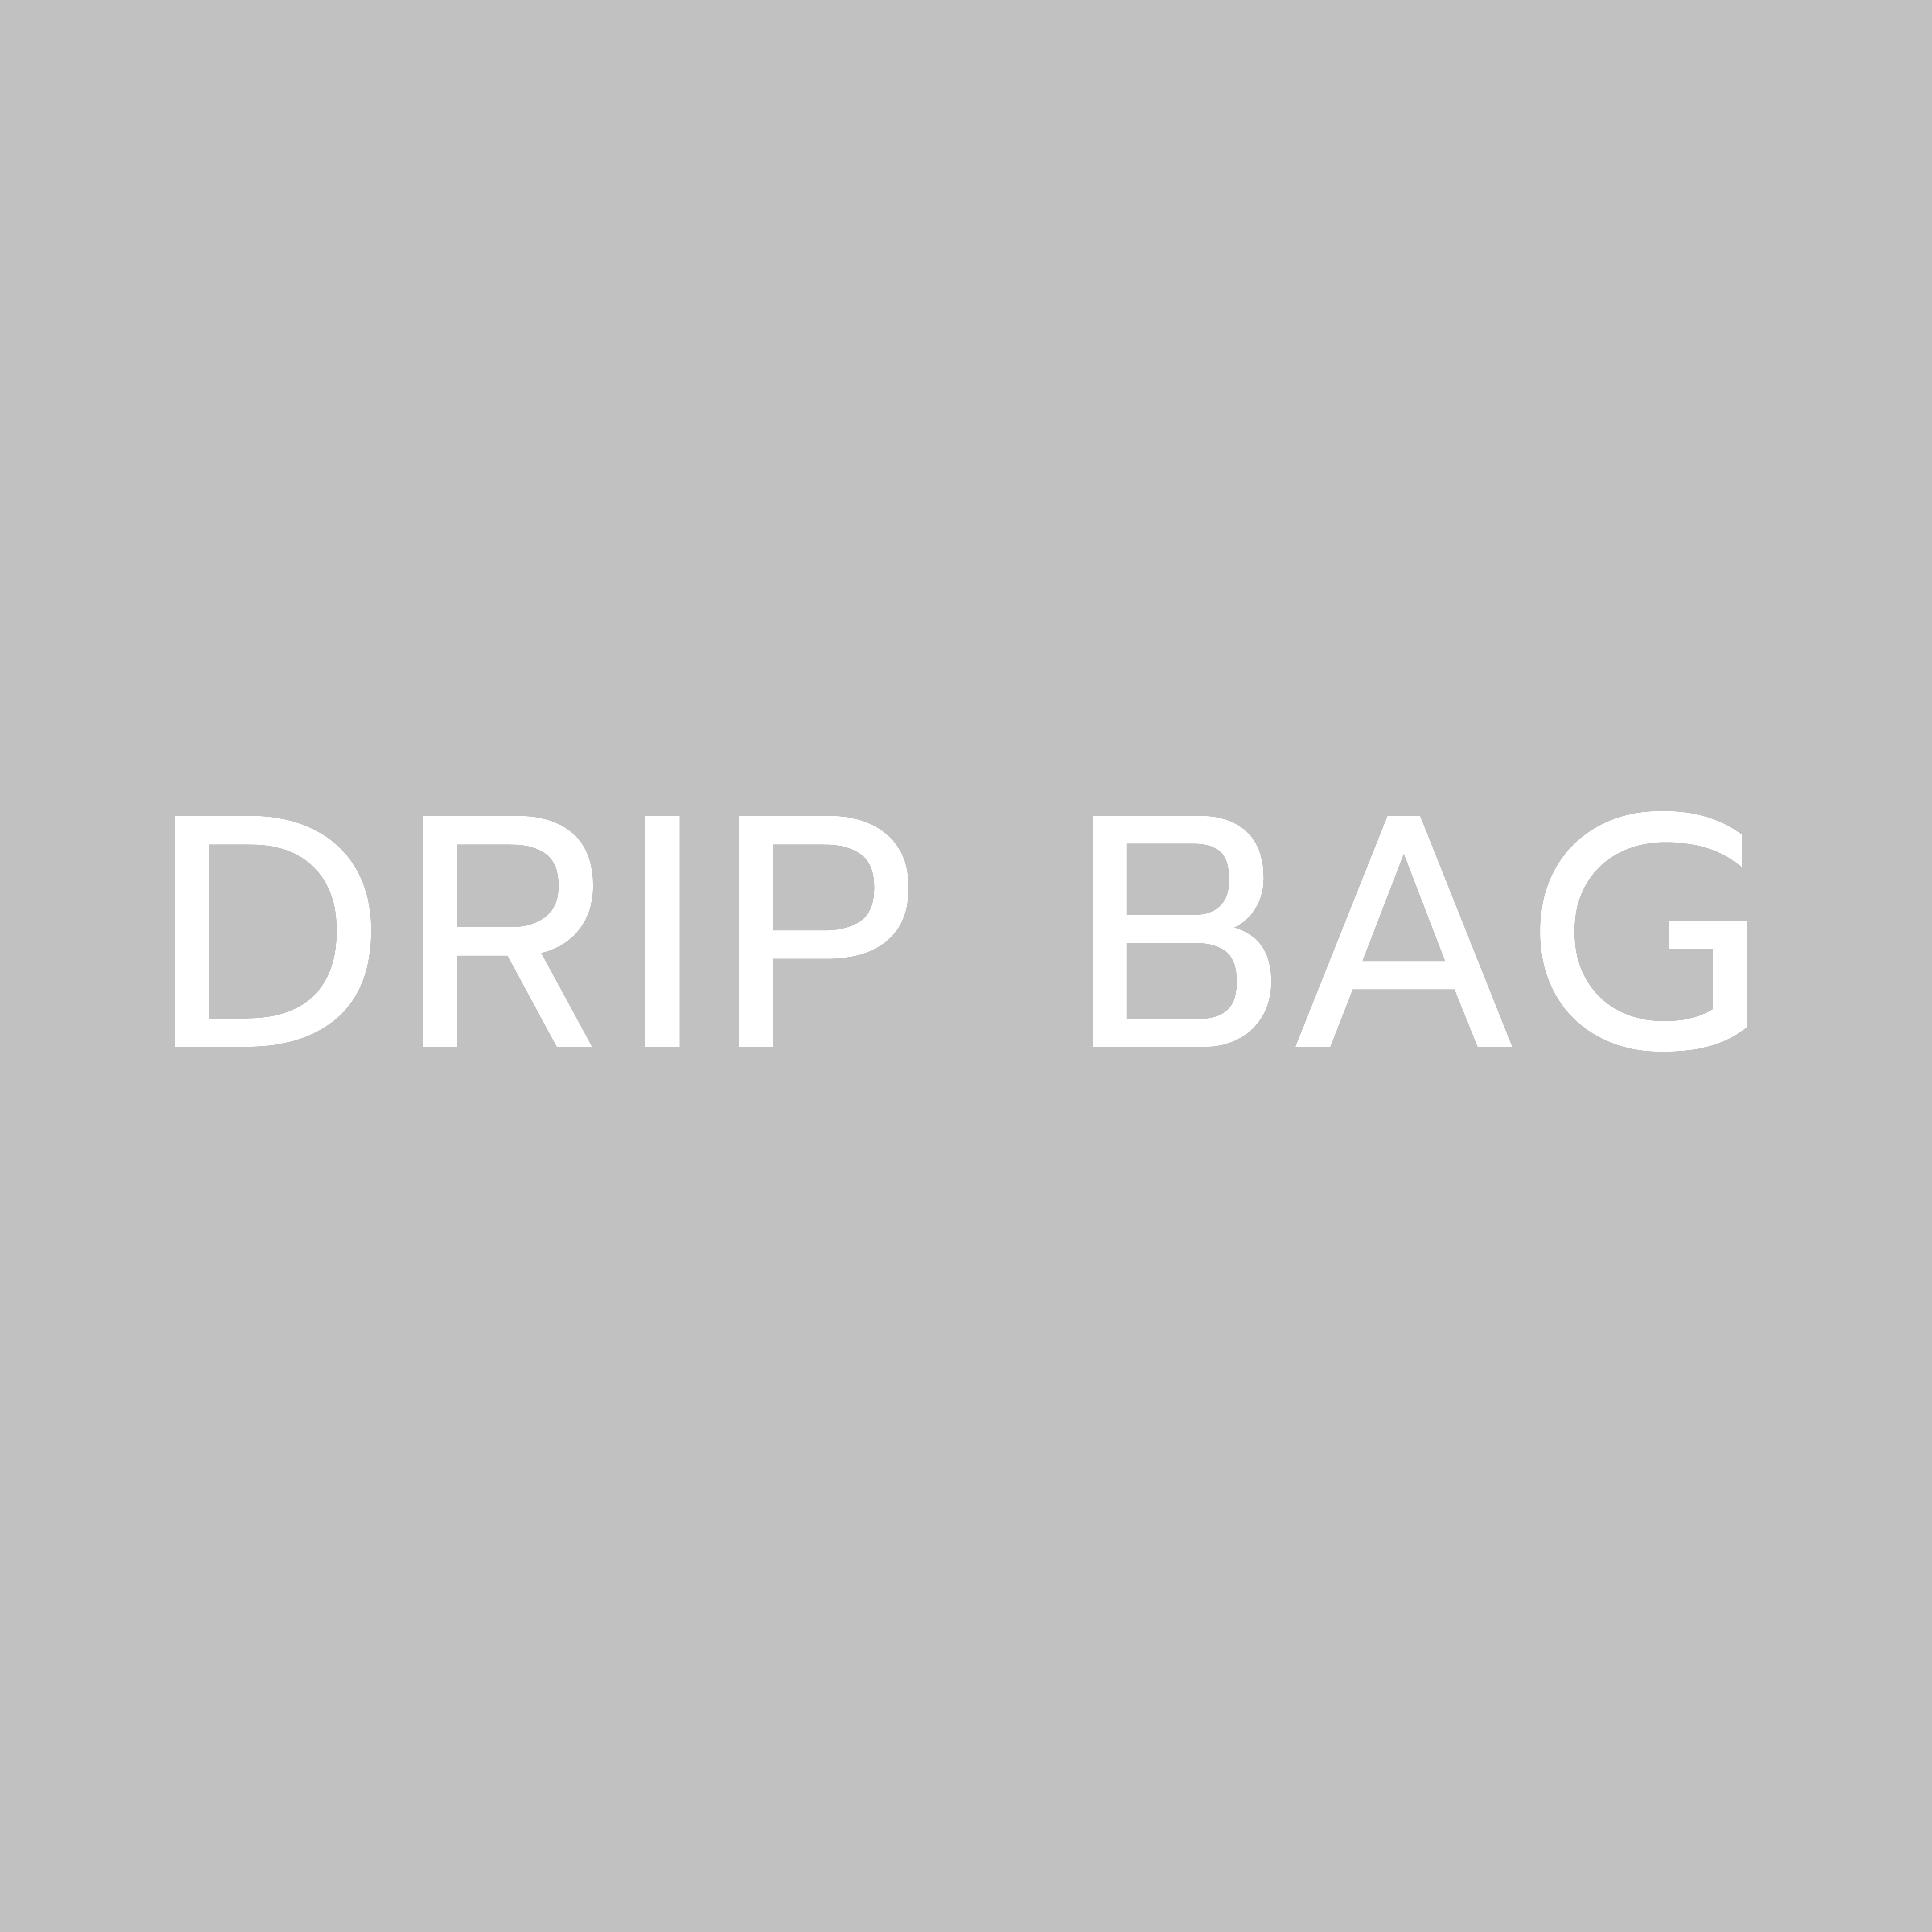 DRIP BAG 